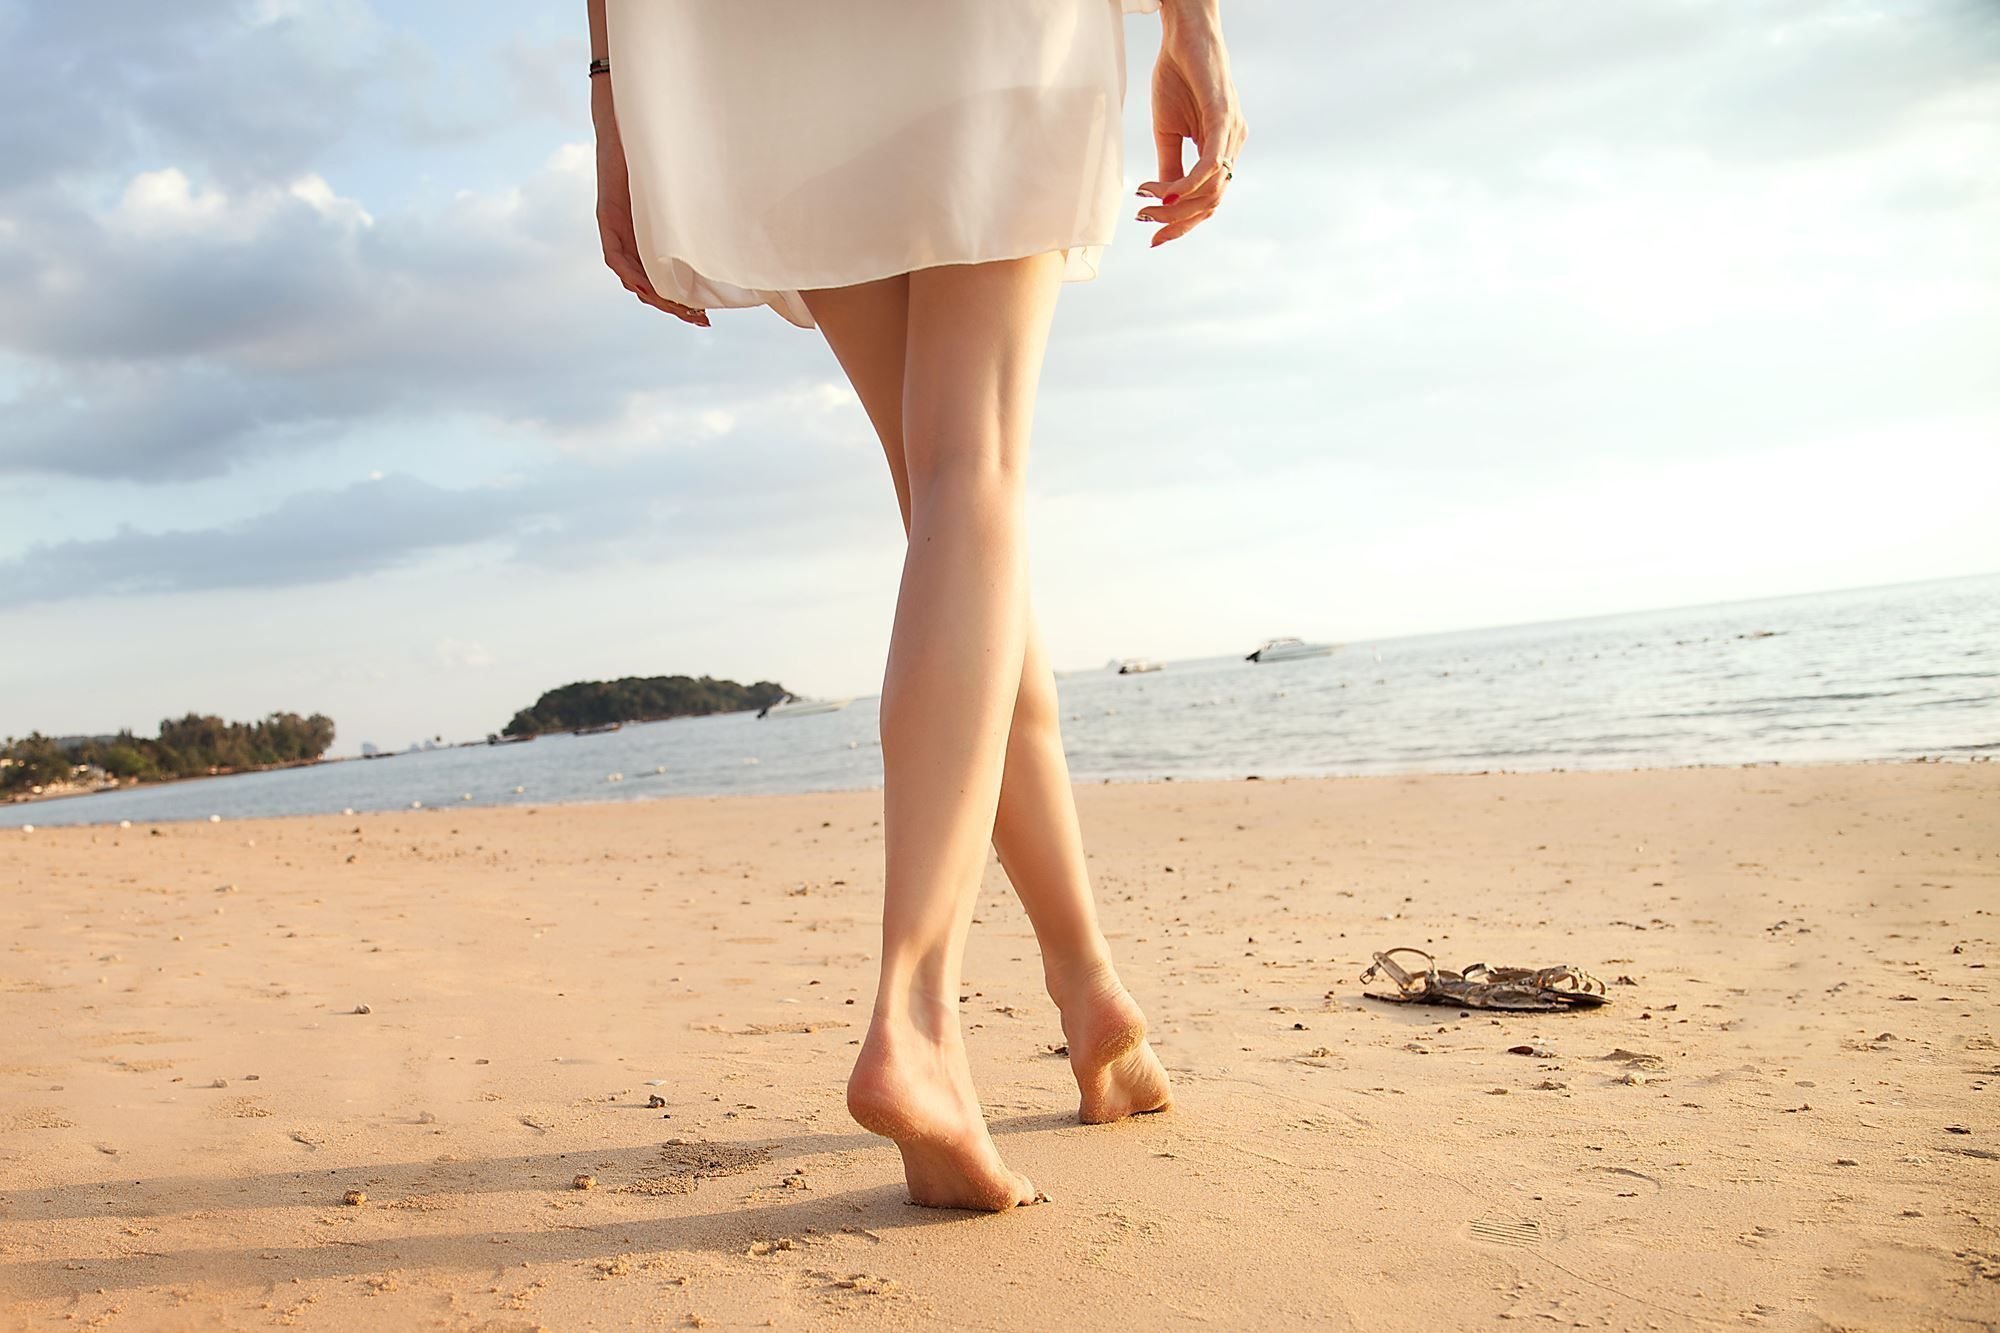 Legs видео. Женские ноги. Красивые ножки. Красивые женские ноги. Ноги на пляже.